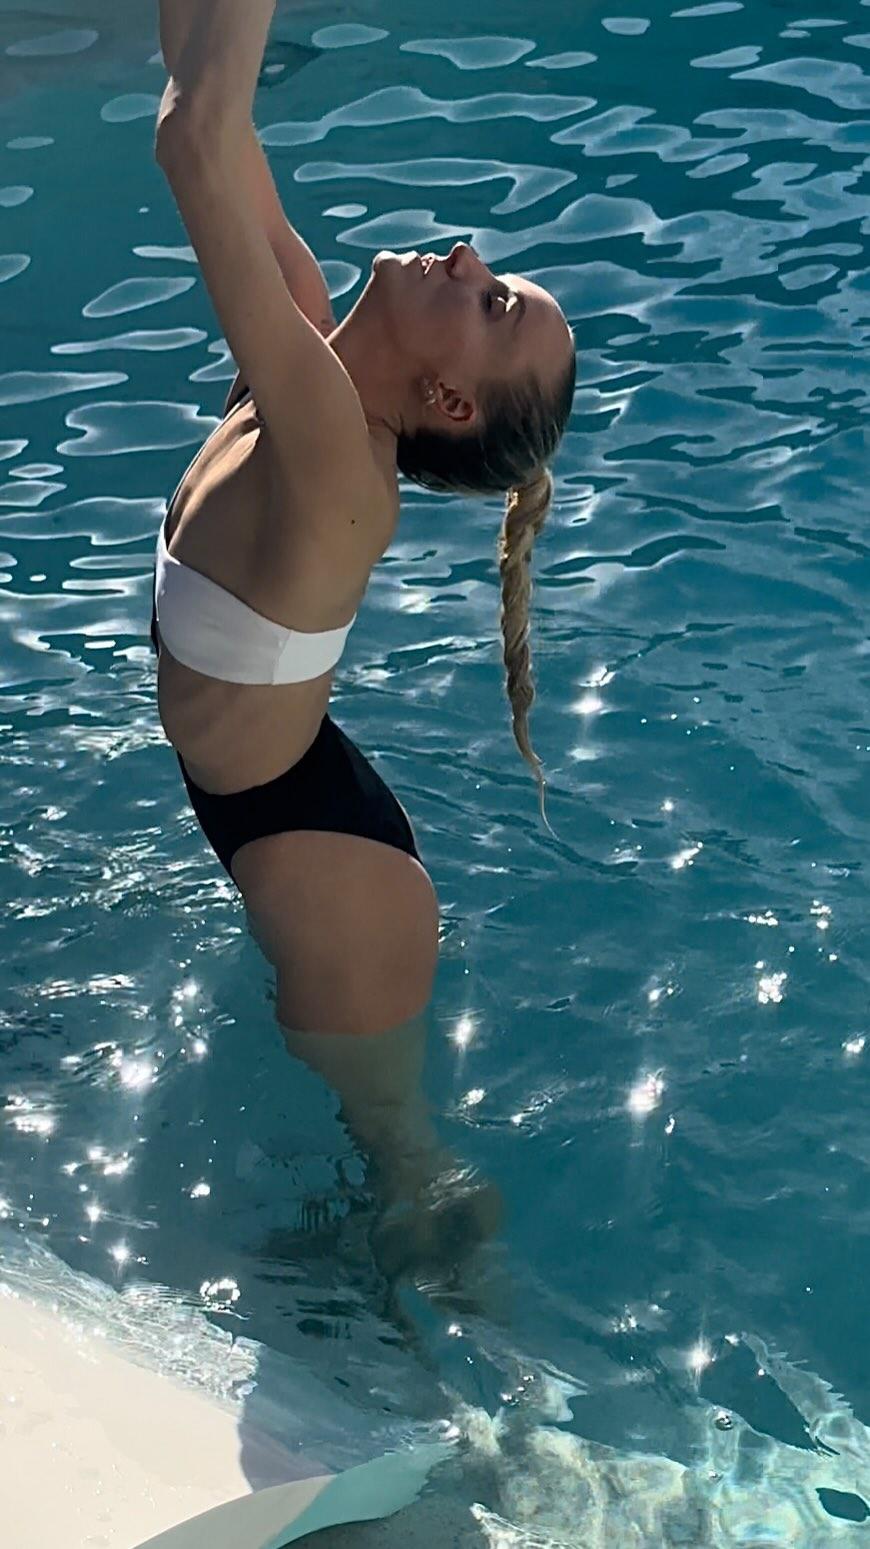 Nastia Liukin hits the pool in her swimsuit